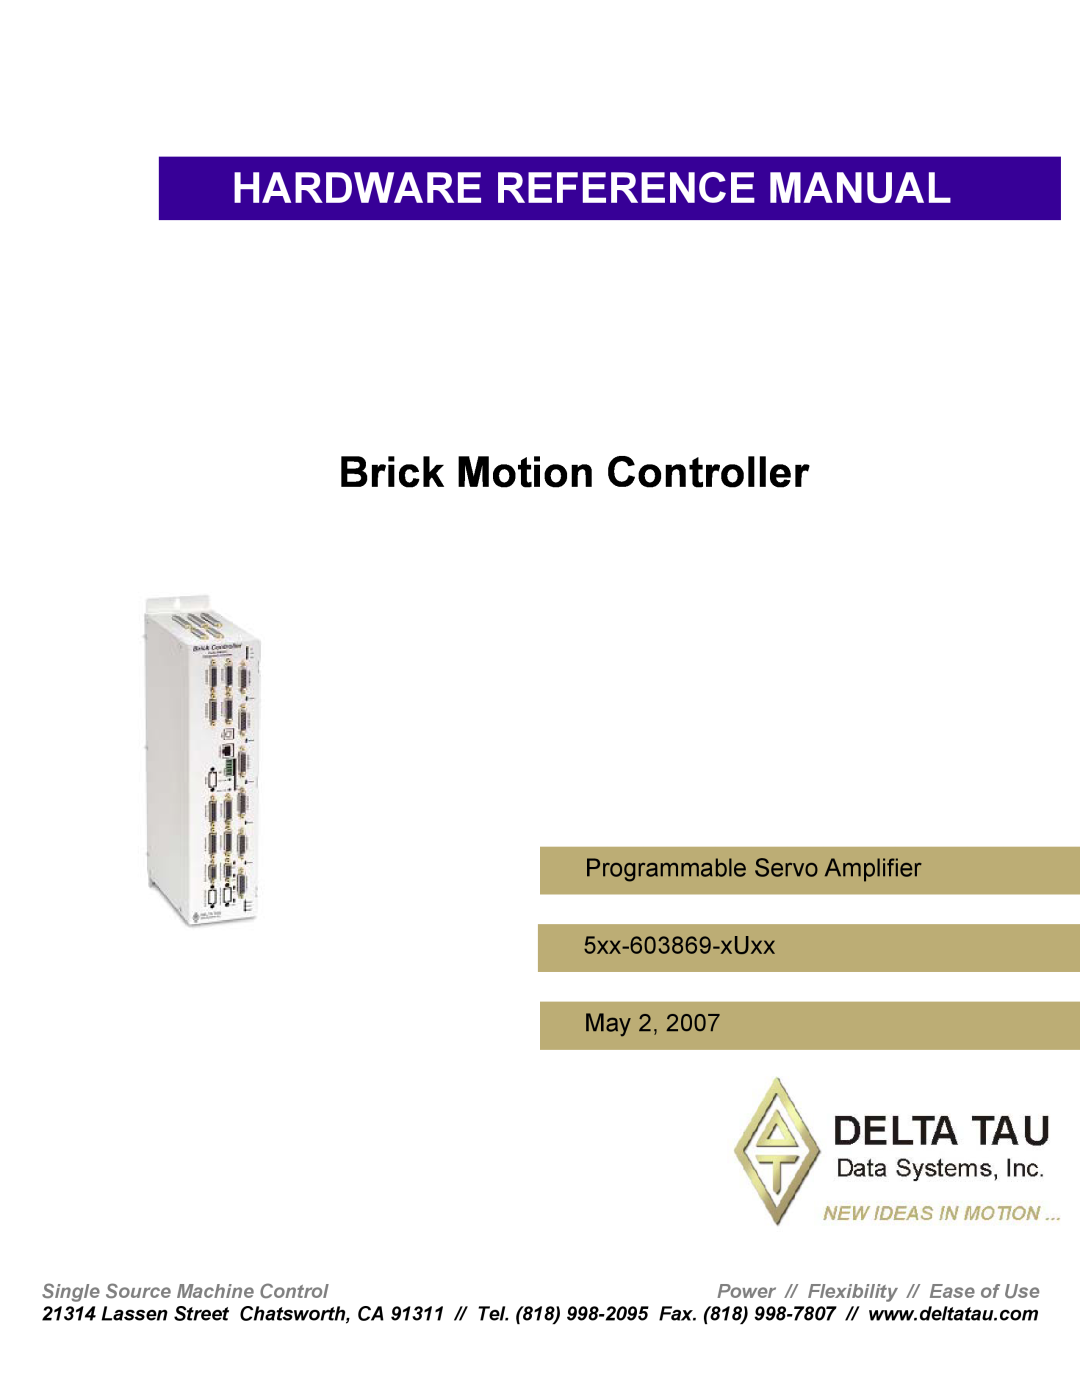 Delta Tau 5xx-603869-xUxx manual Hardware Reference Manual, Brick Motion Controller 